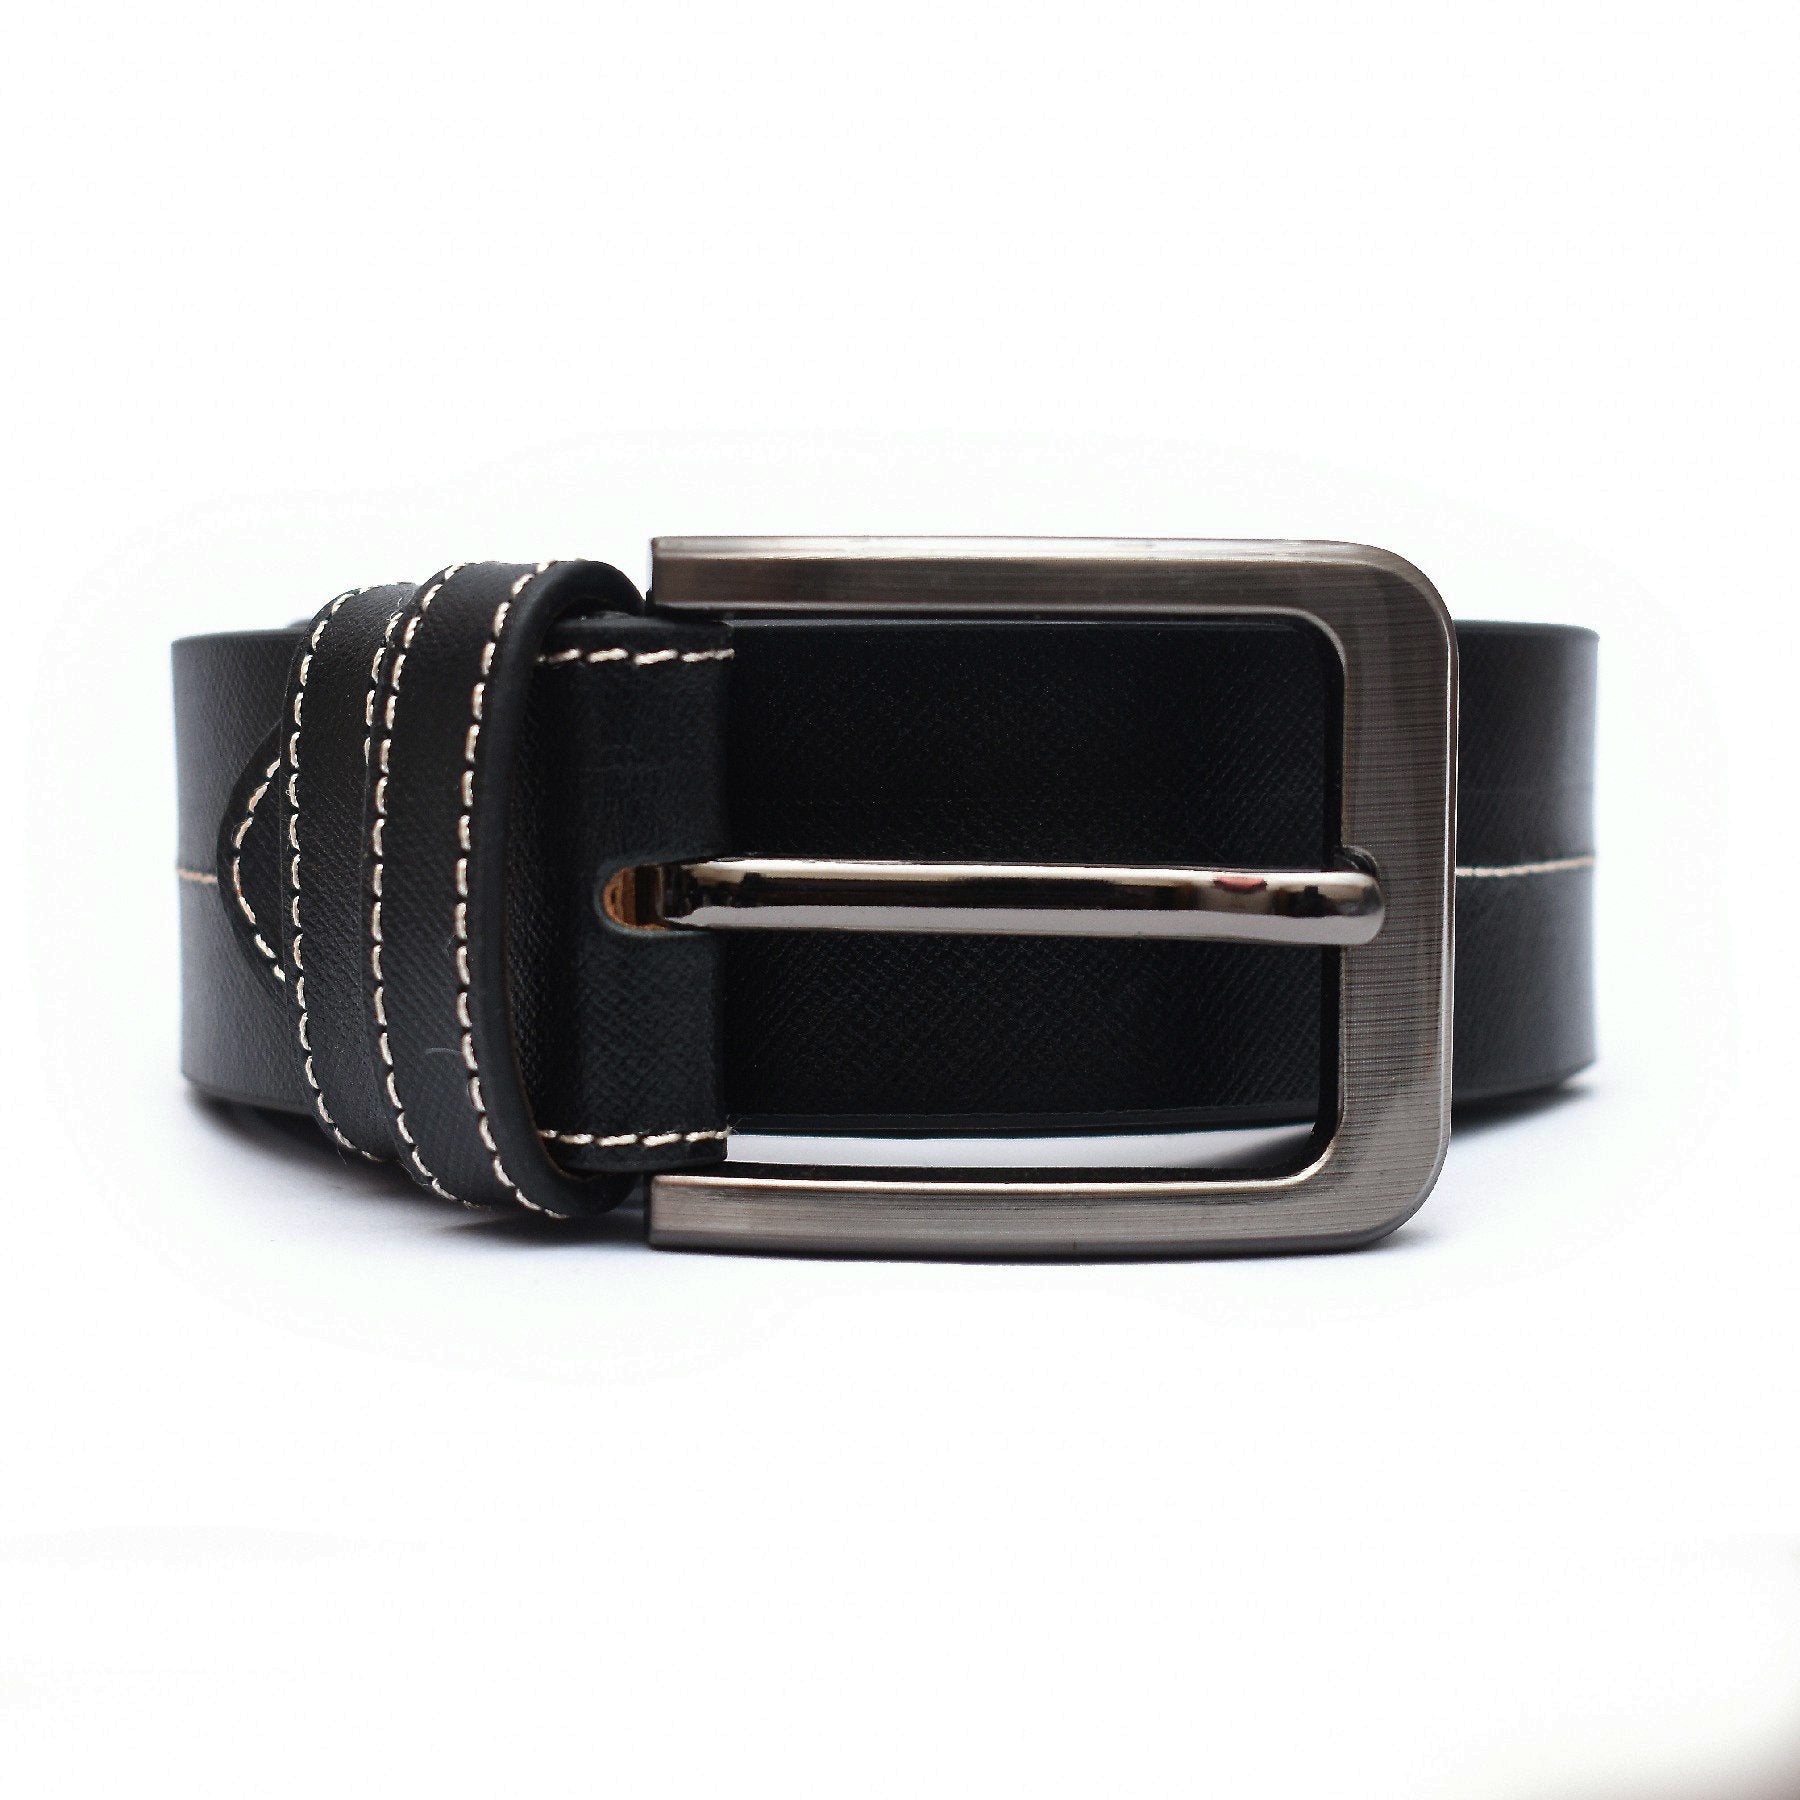 Zays Premium Saffiano leather Belt for Men - (Black) ZAYSBL23